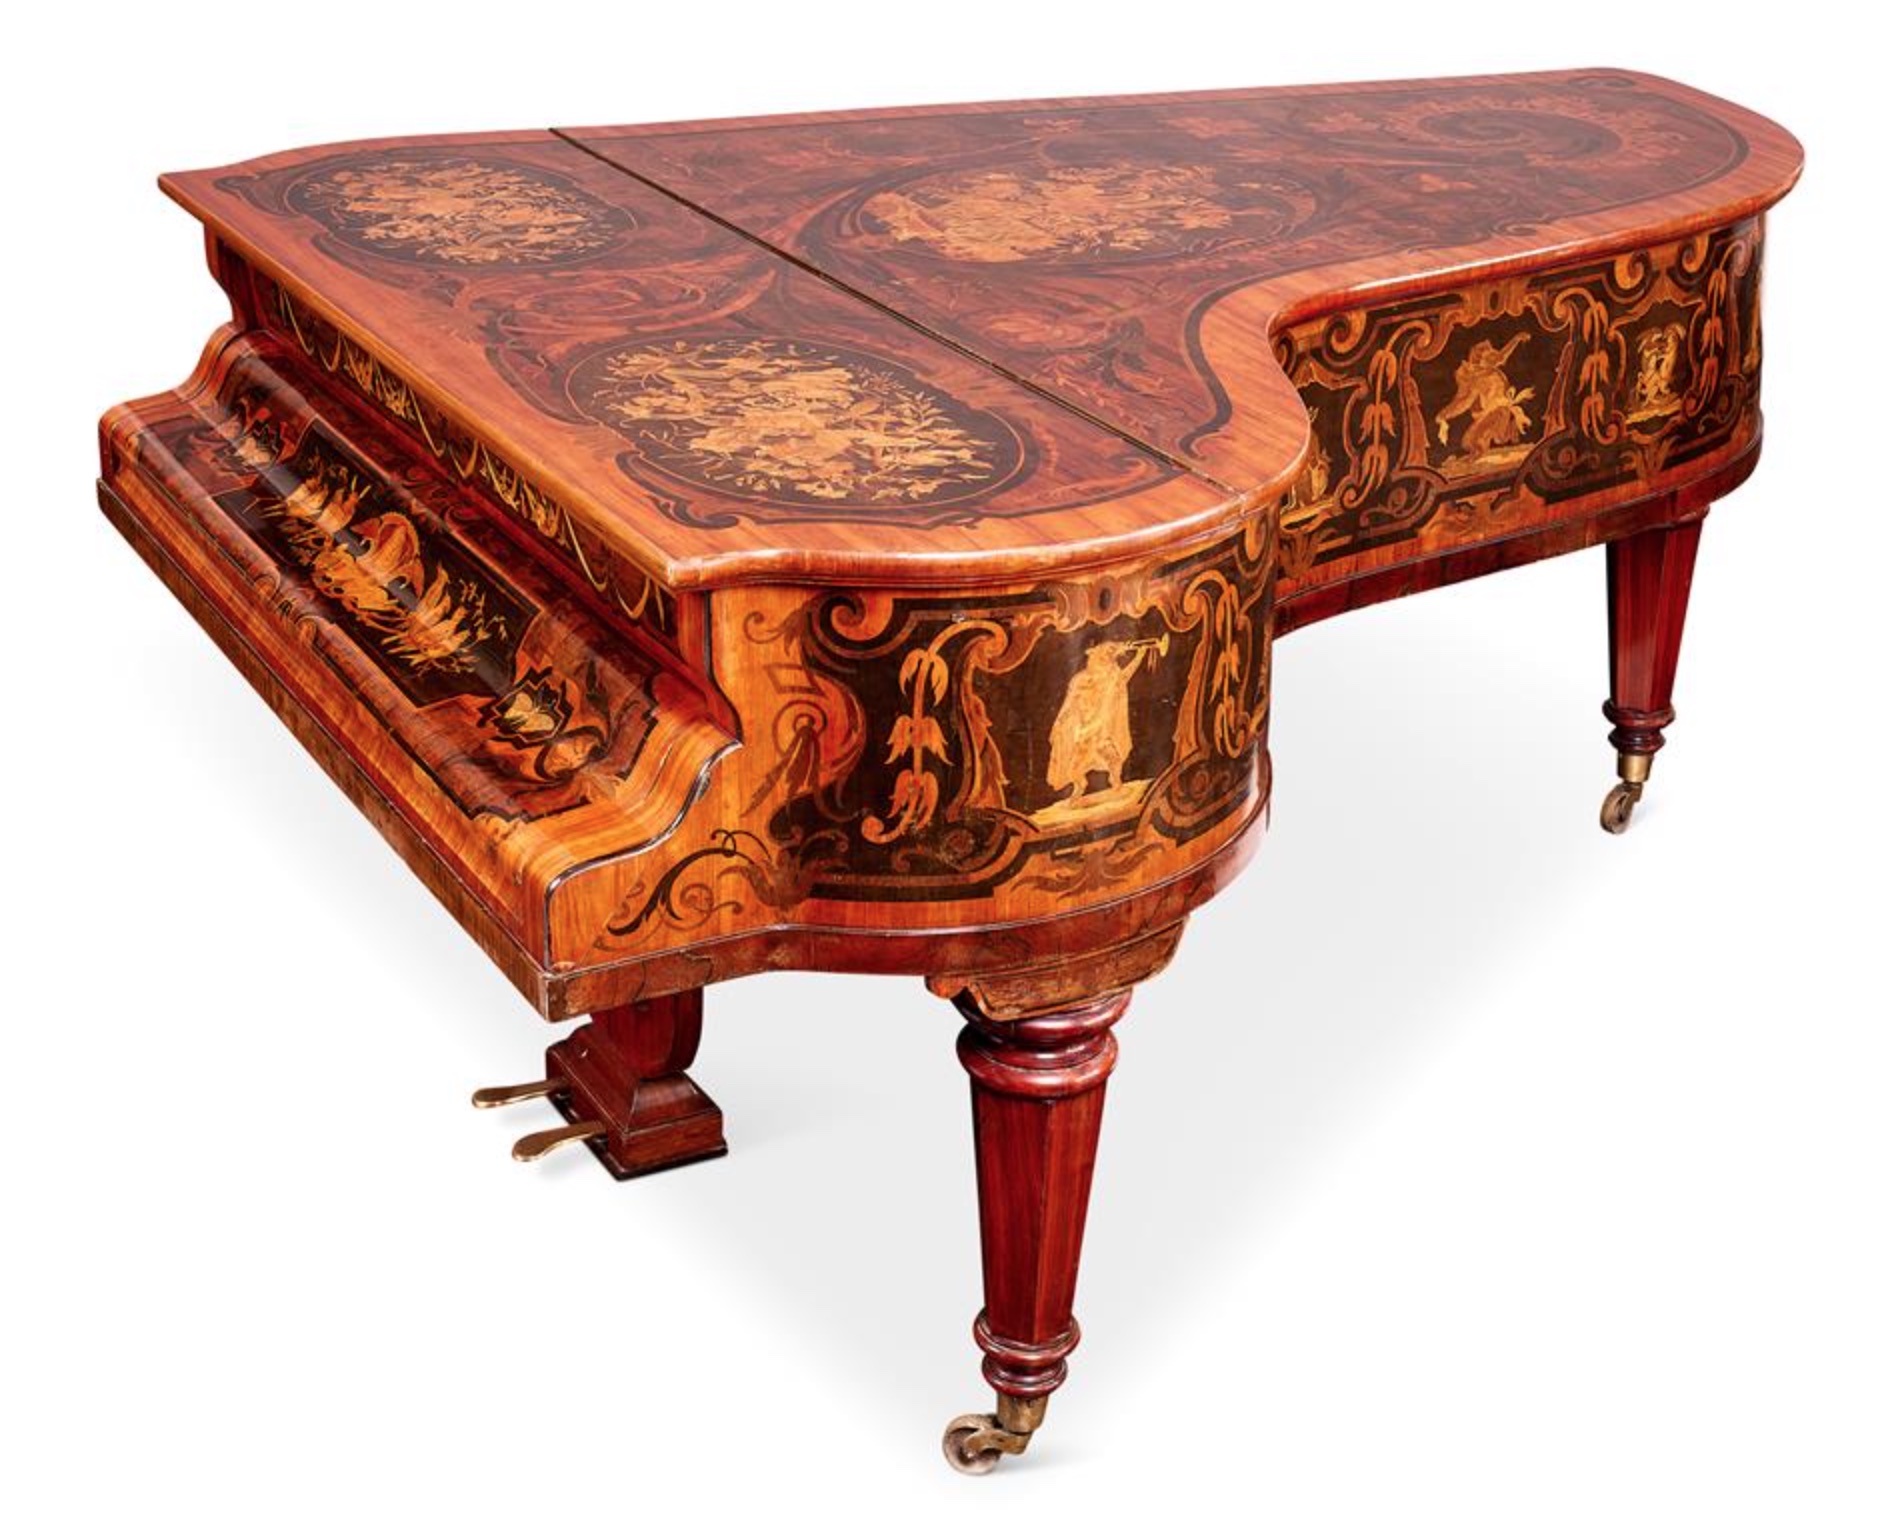 An antique grand piano